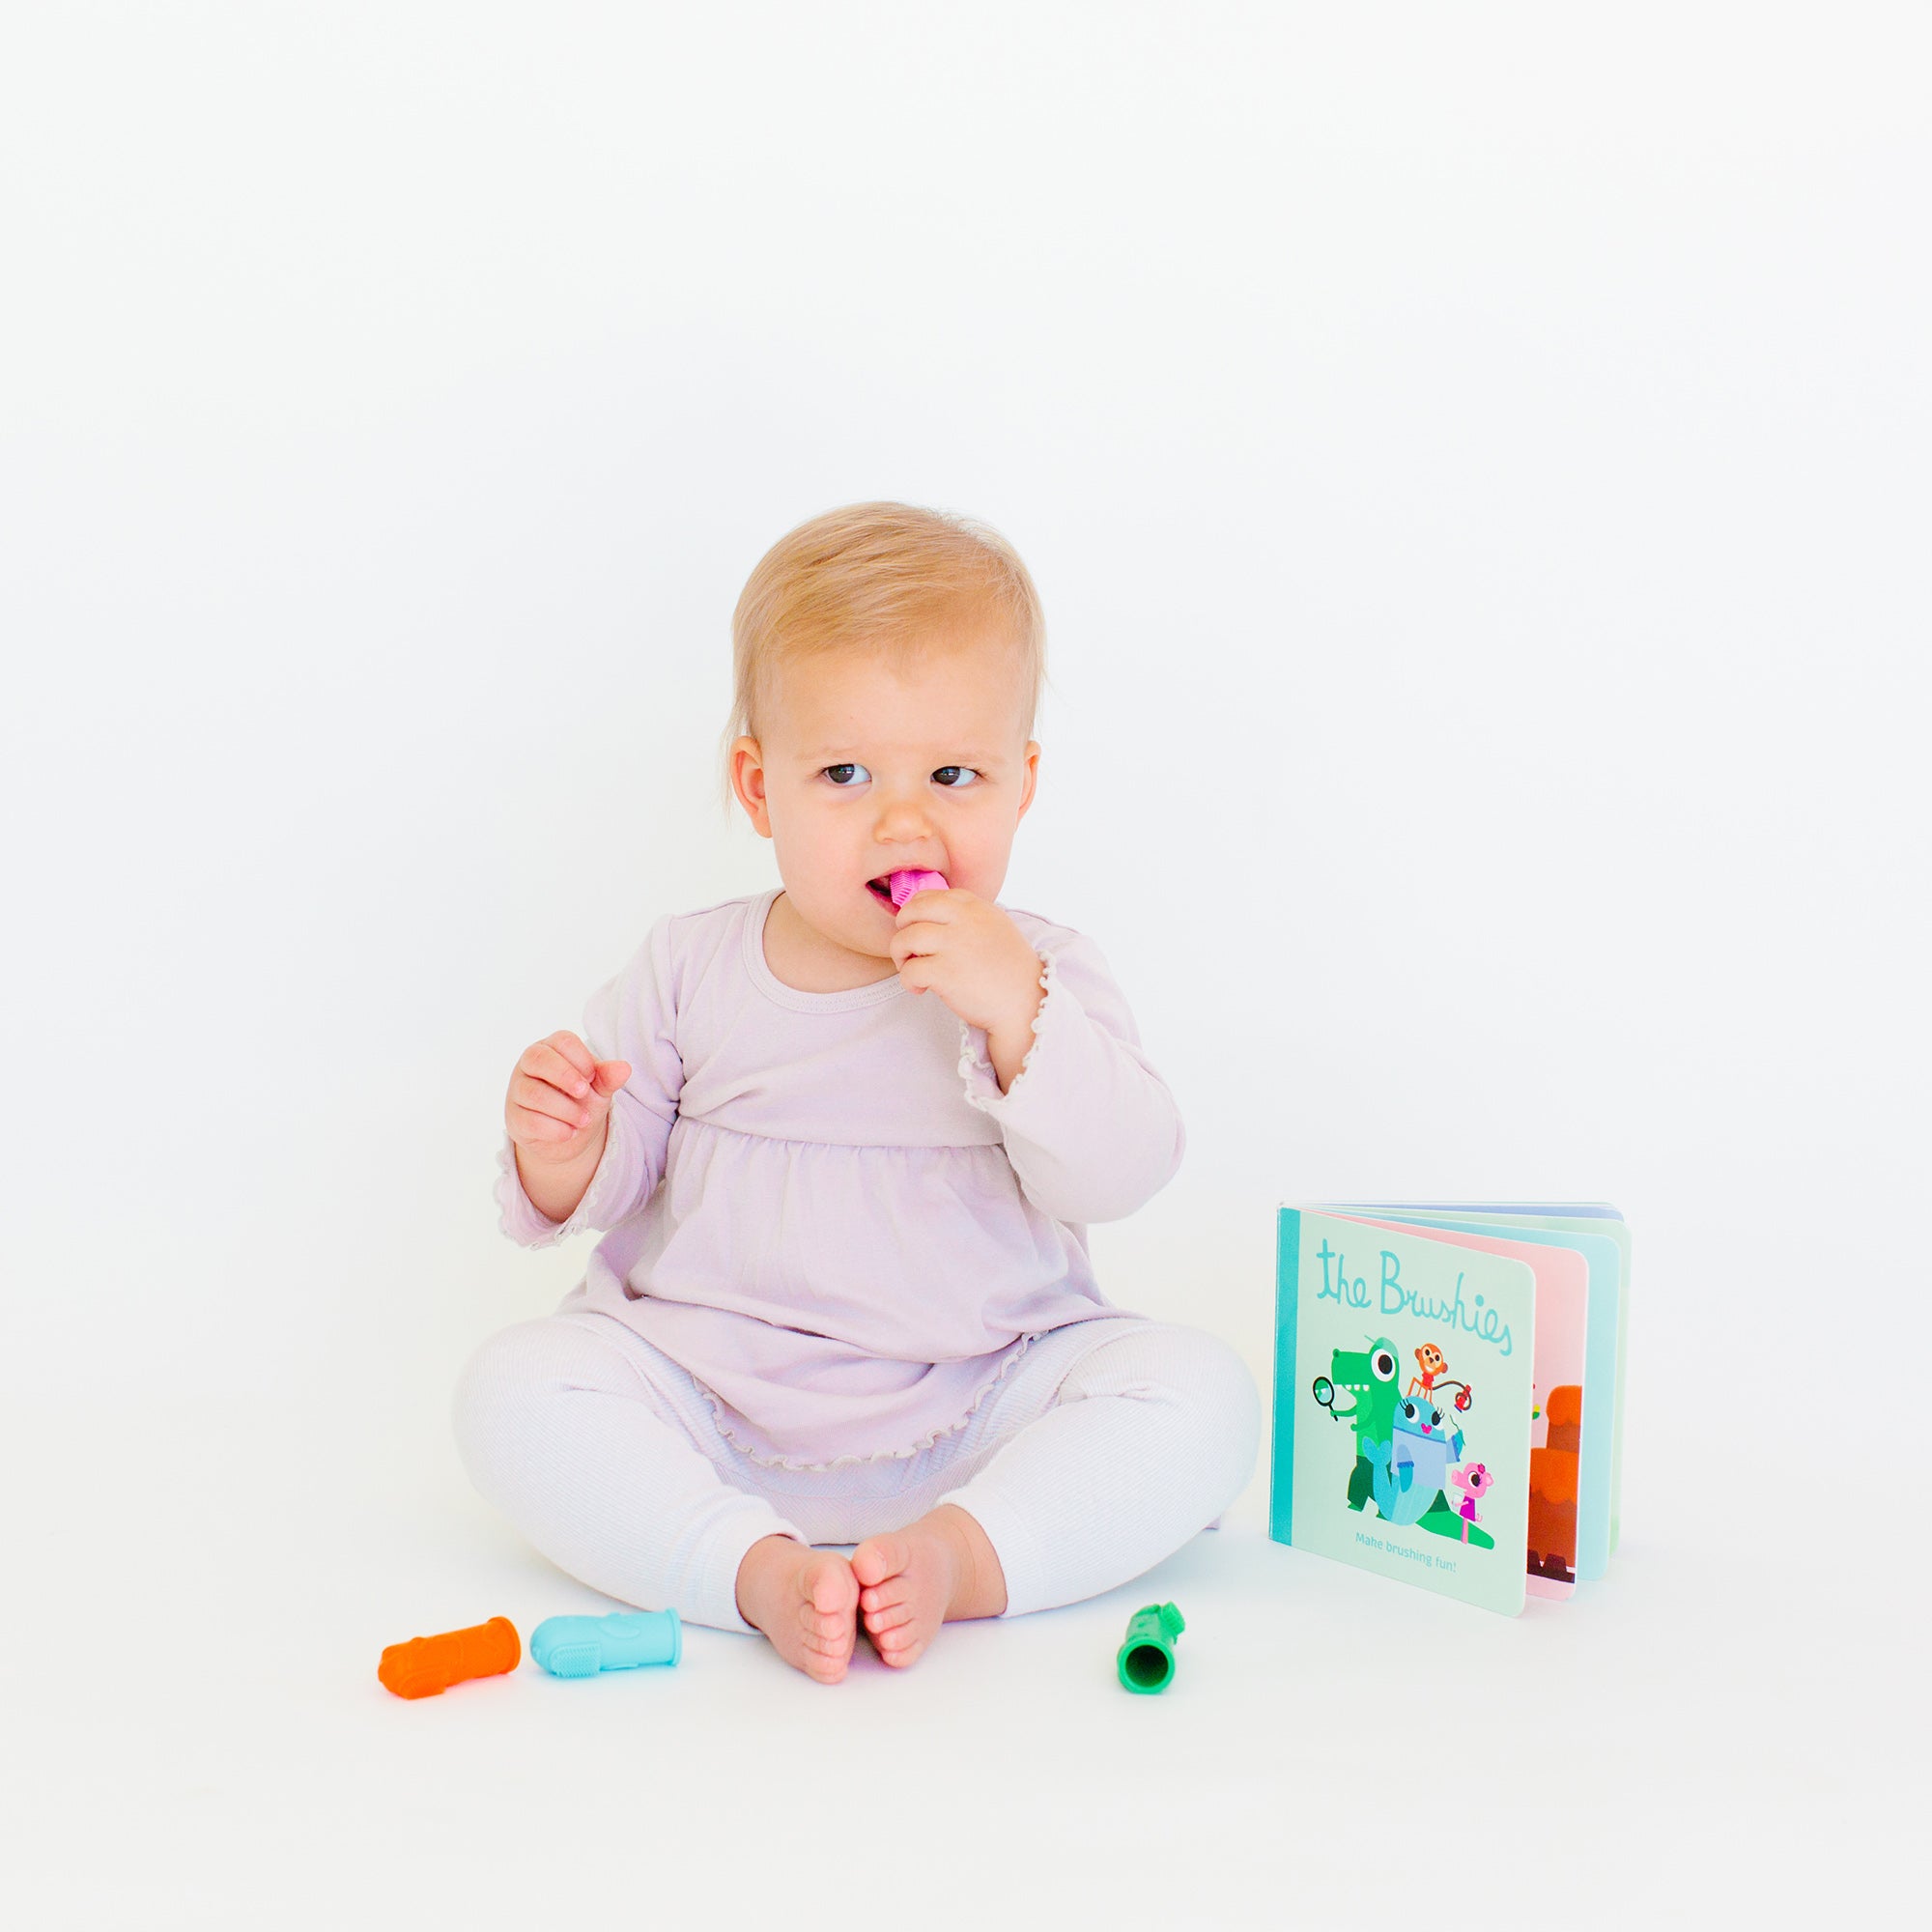 Pinkey the Pig Brushie and Book baby toddler toothbrush